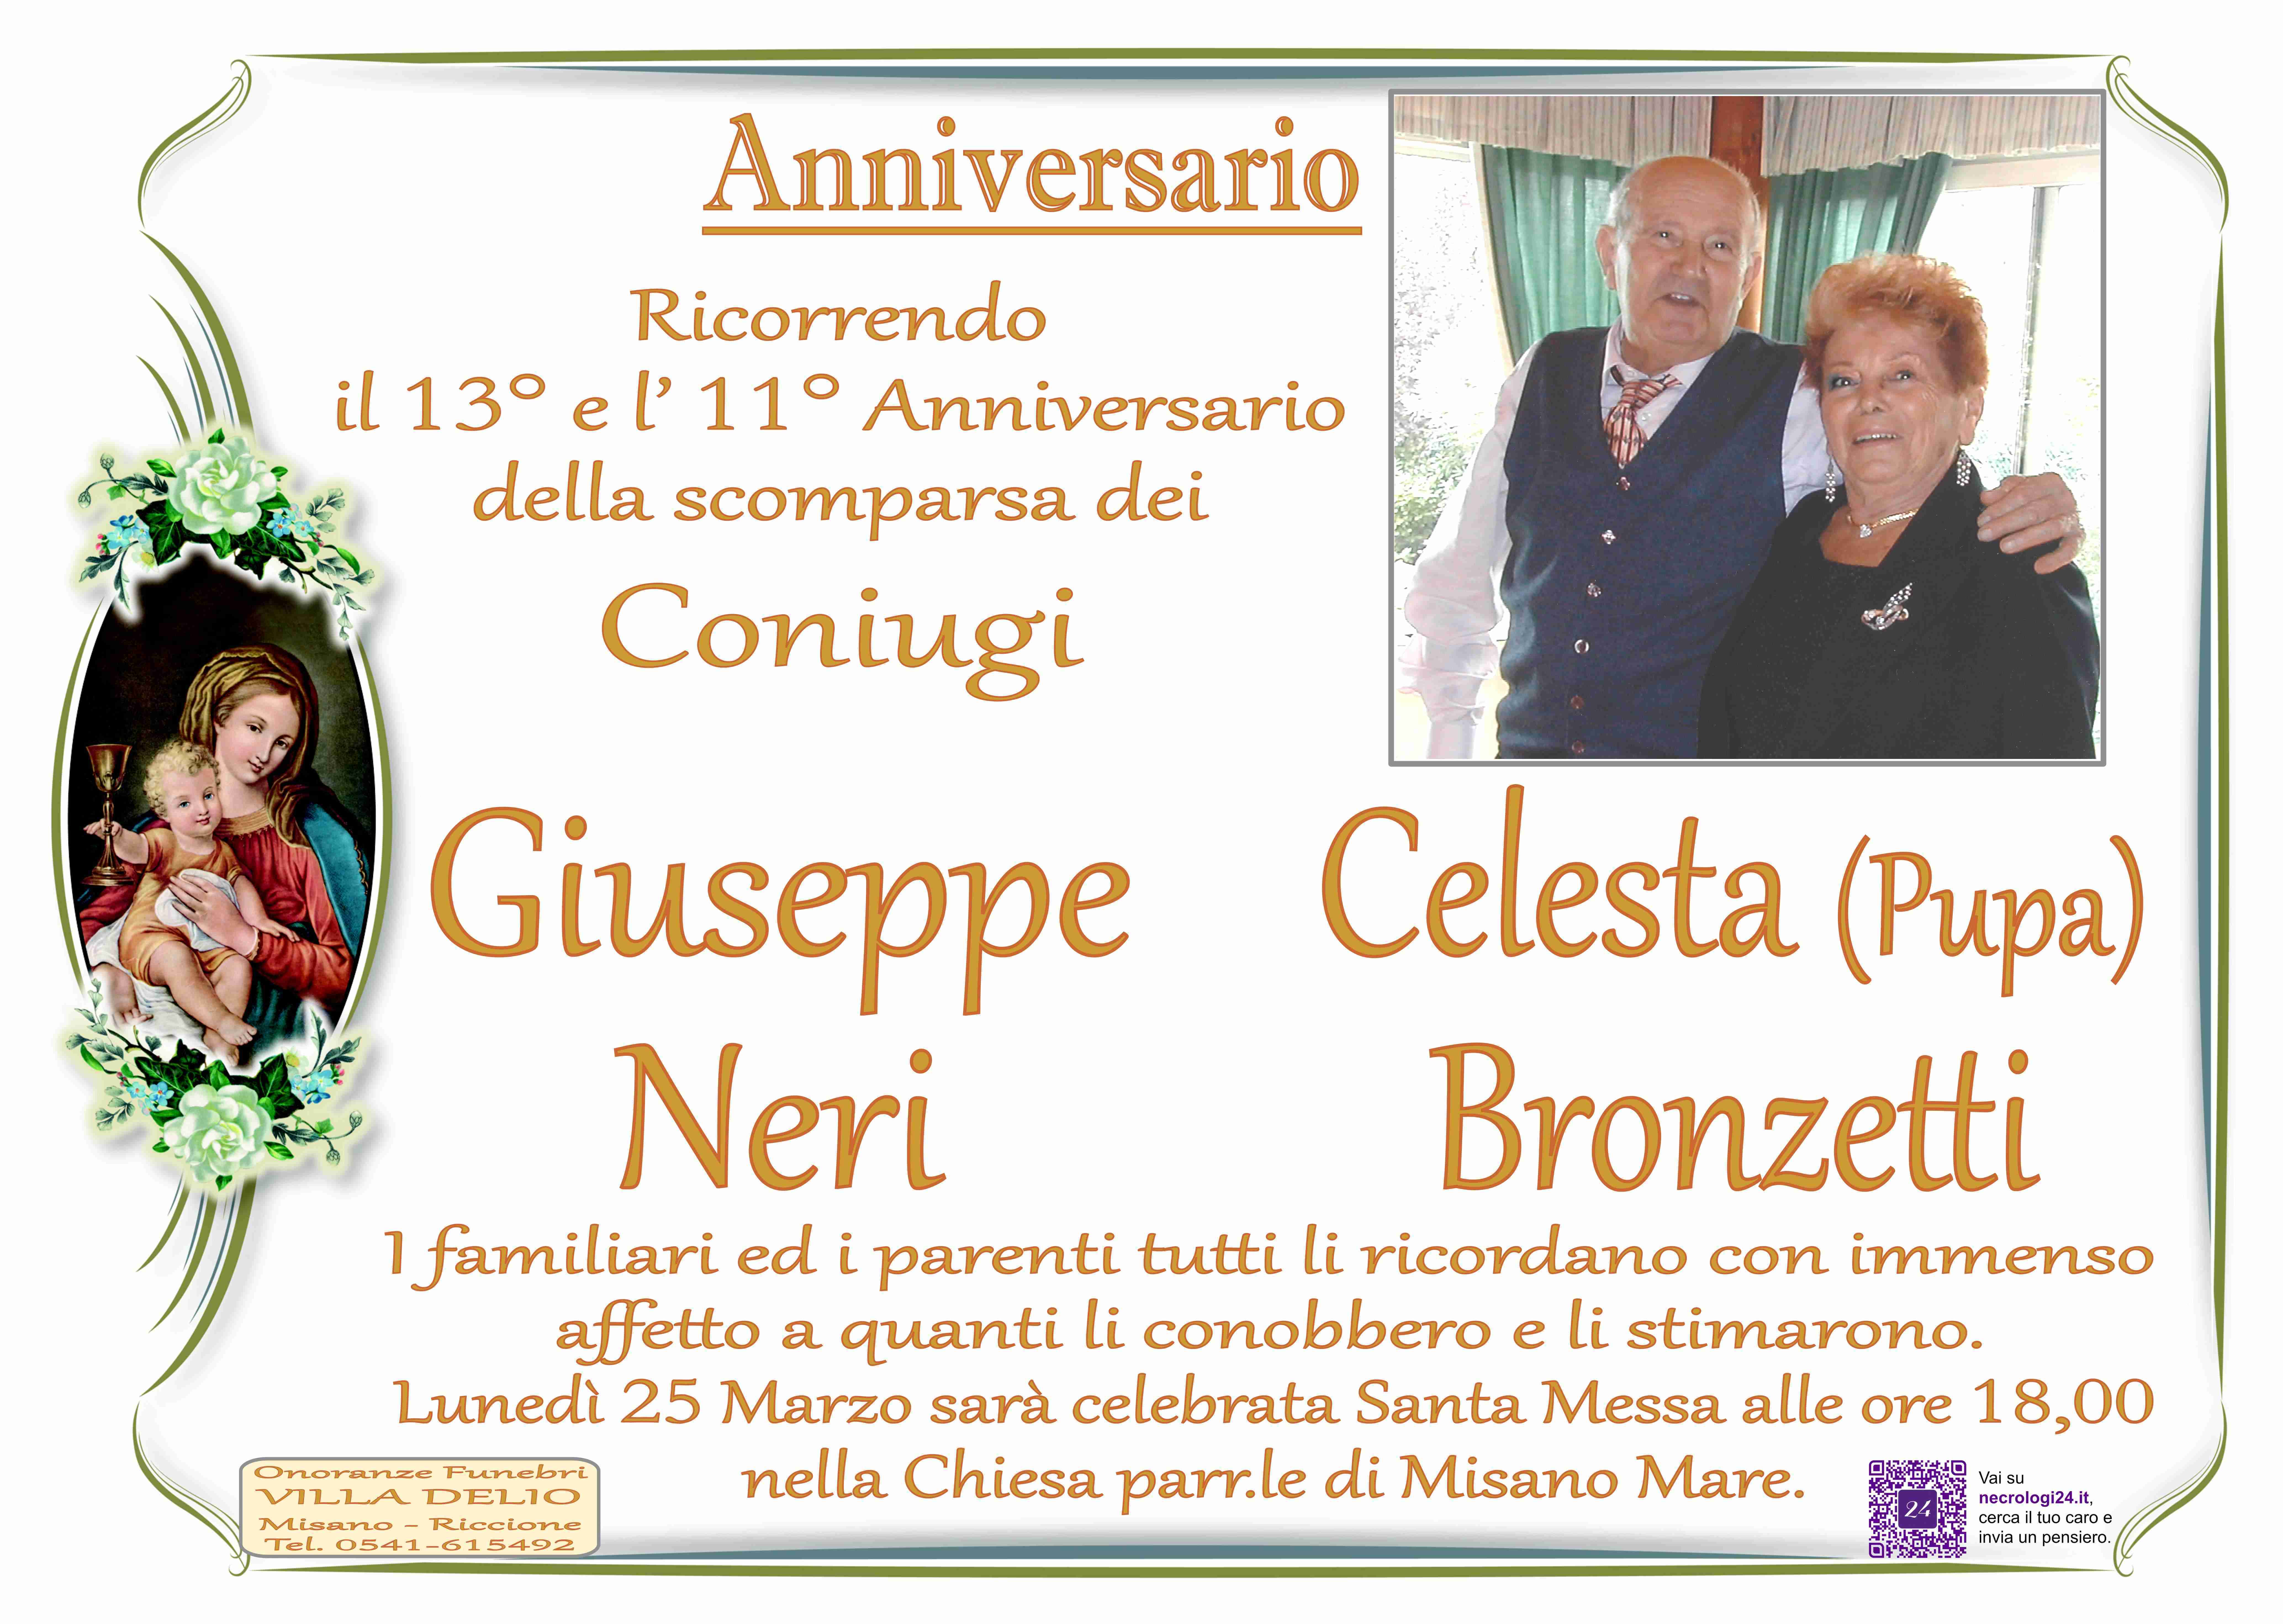 Giuseppe Neri e Celesta (Pupa) Bronzetti